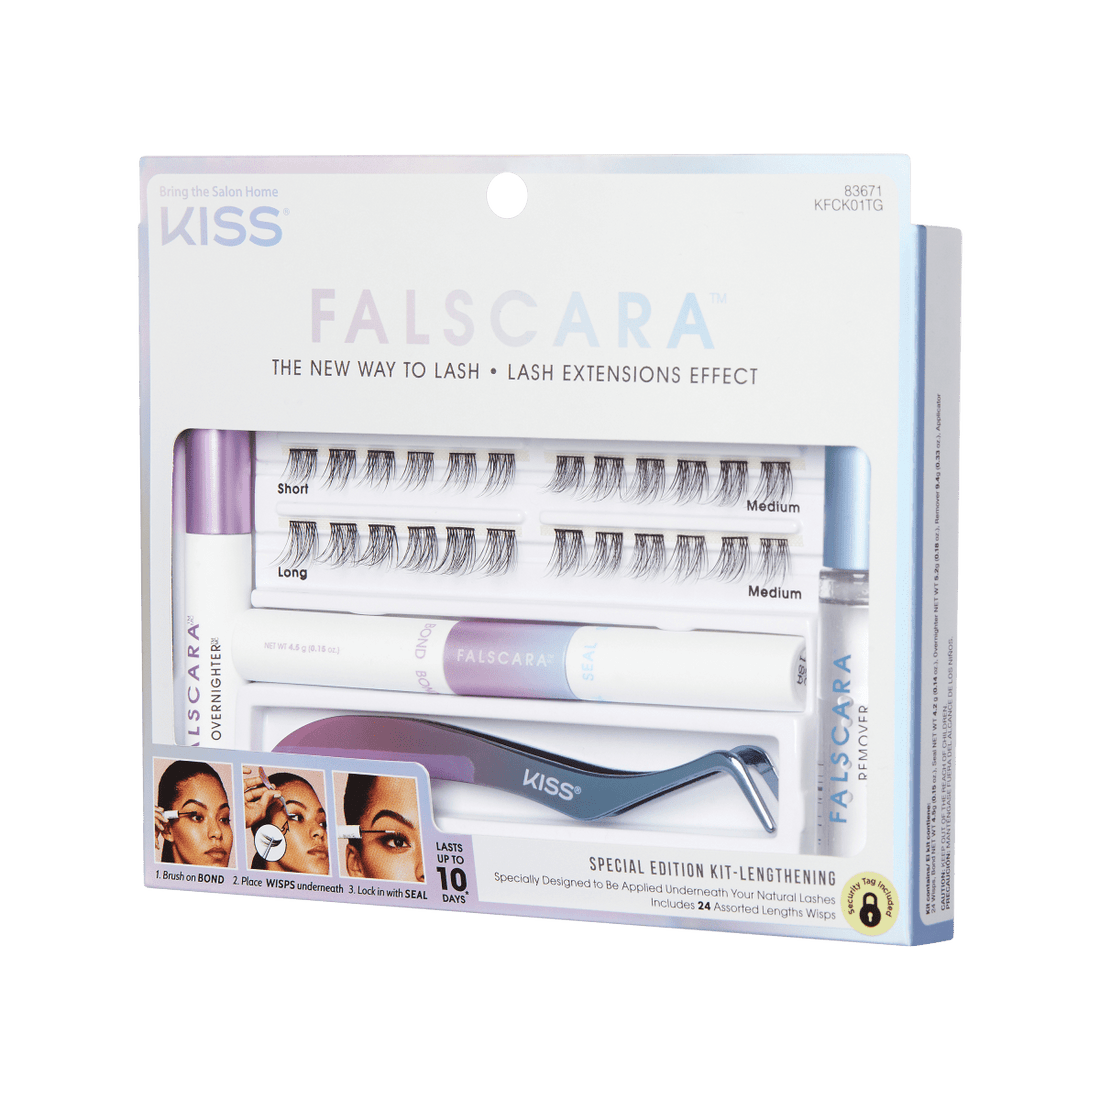 Package of Falscara DIY Eyelash extension starter kit includes 24 lash wisps, eyelash applicator, lash bond and seal and remover